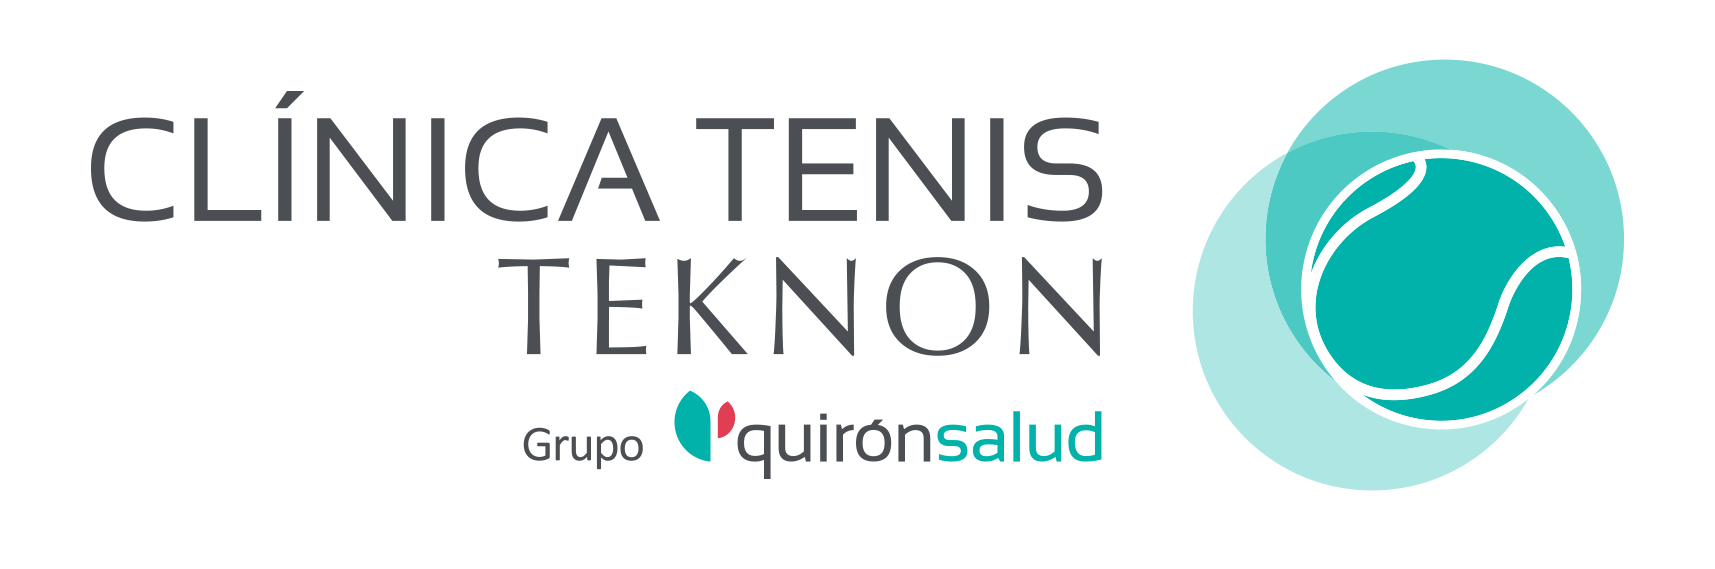 Clínica Tenis Teknon